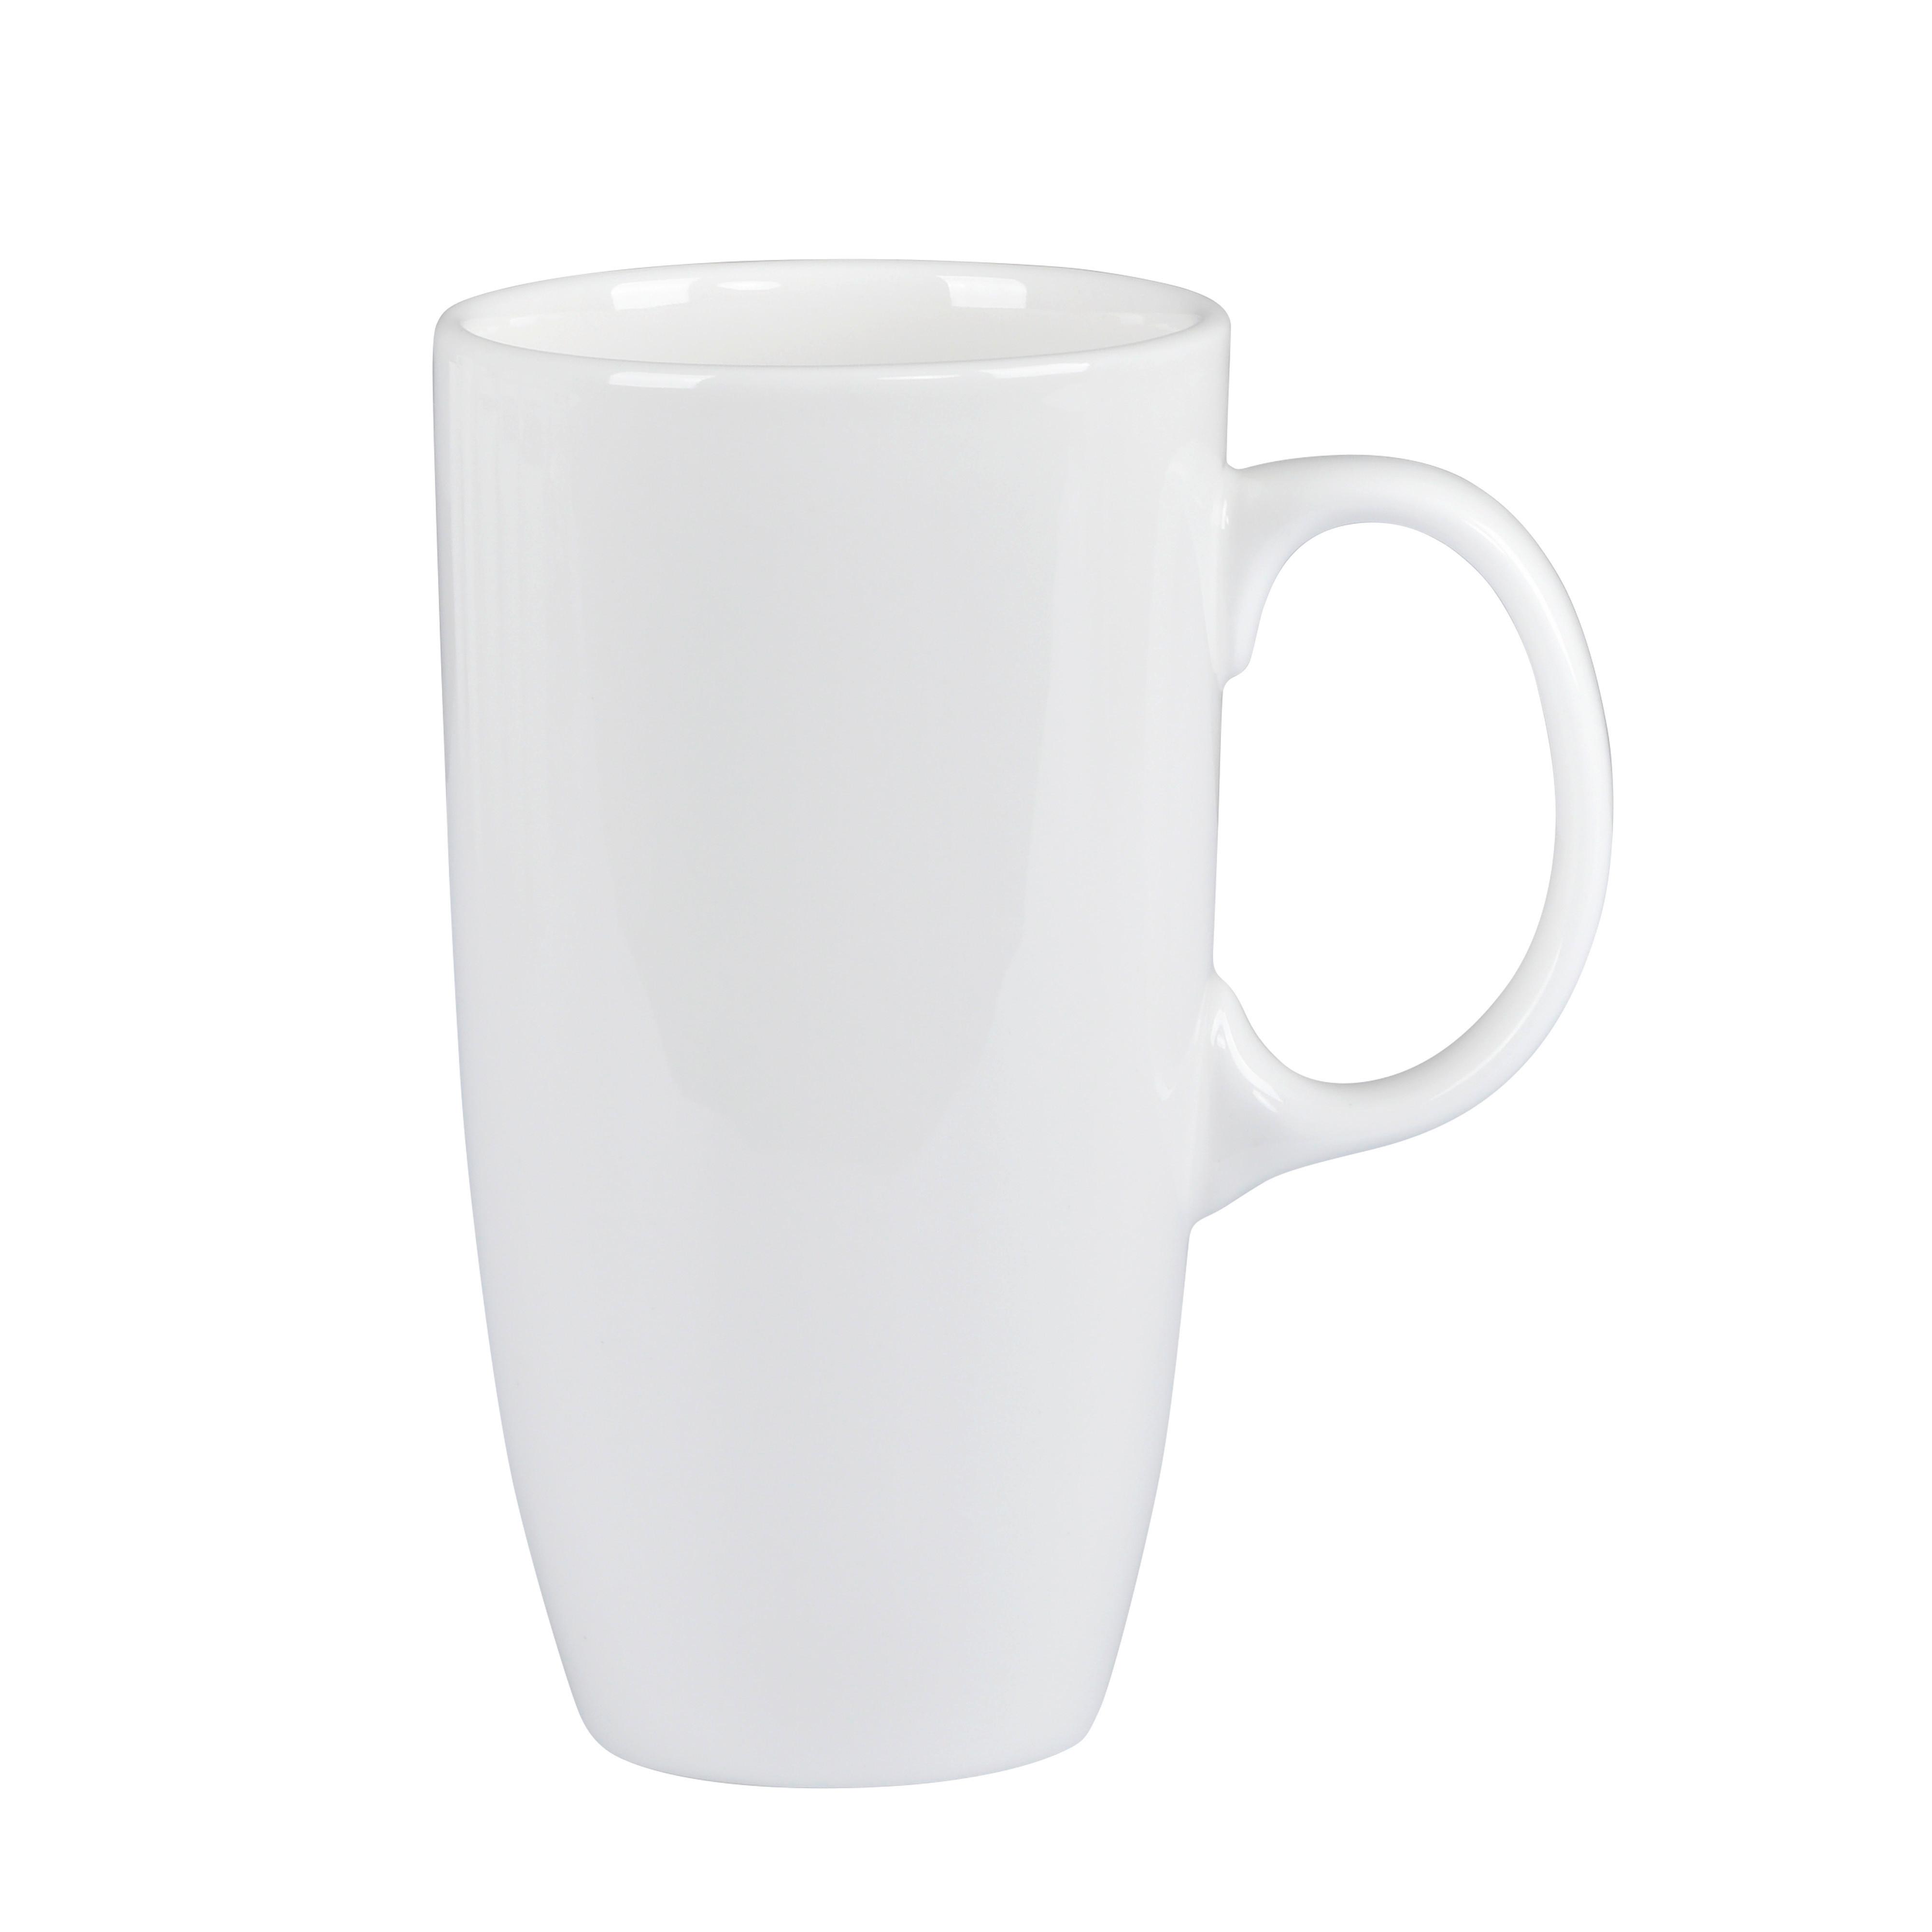 Kaffeebecher High aus Keramik ca. 600ml - Weiß, KONVENTIONELL, Keramik (8,7/16cm) - Premium Living